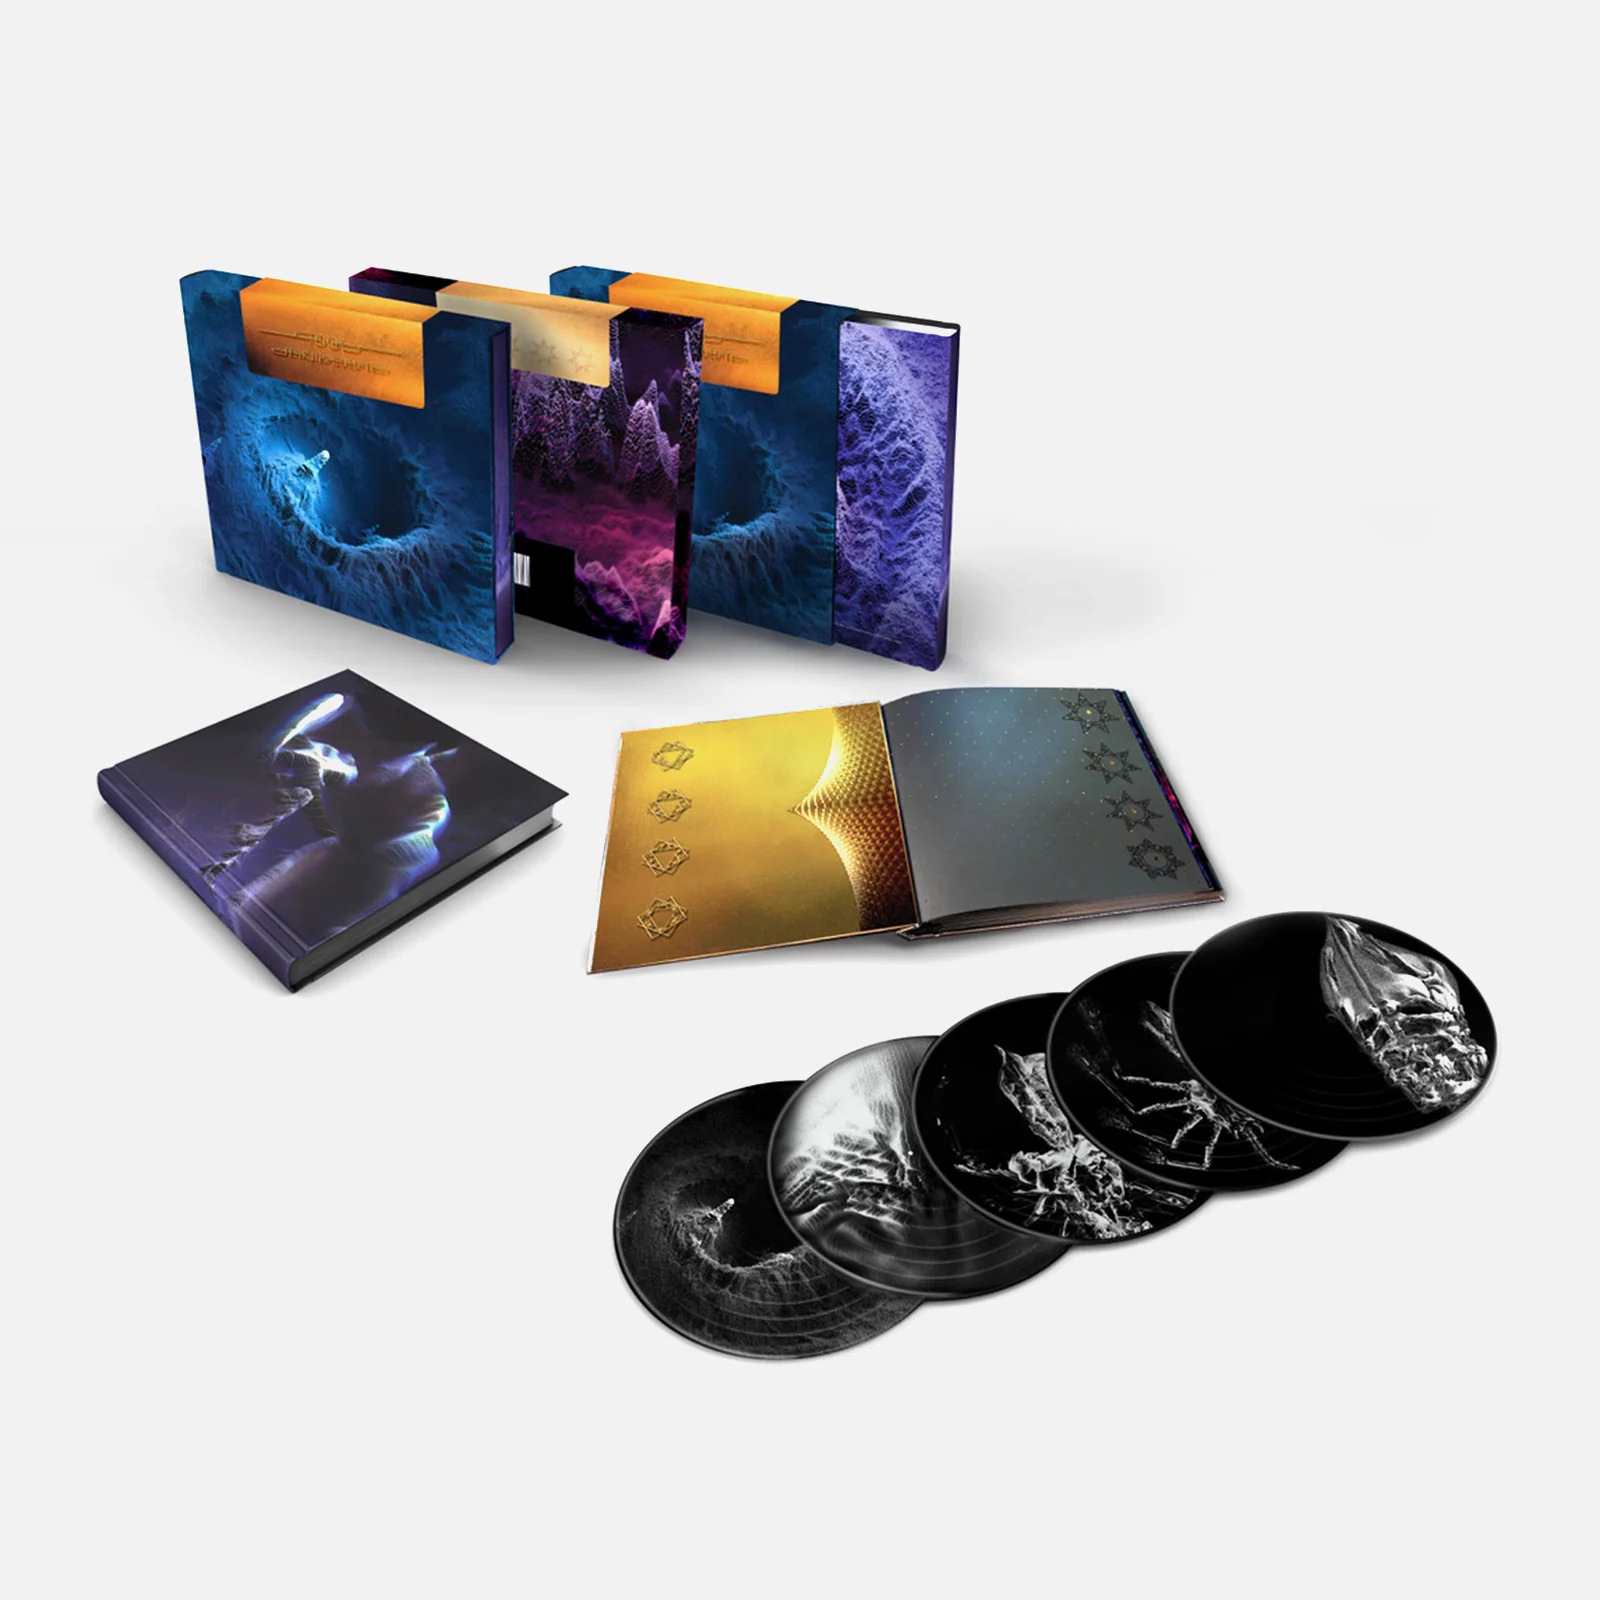 Fear Inoculum by Tool (Vinyl, 2022) box set new In shrink